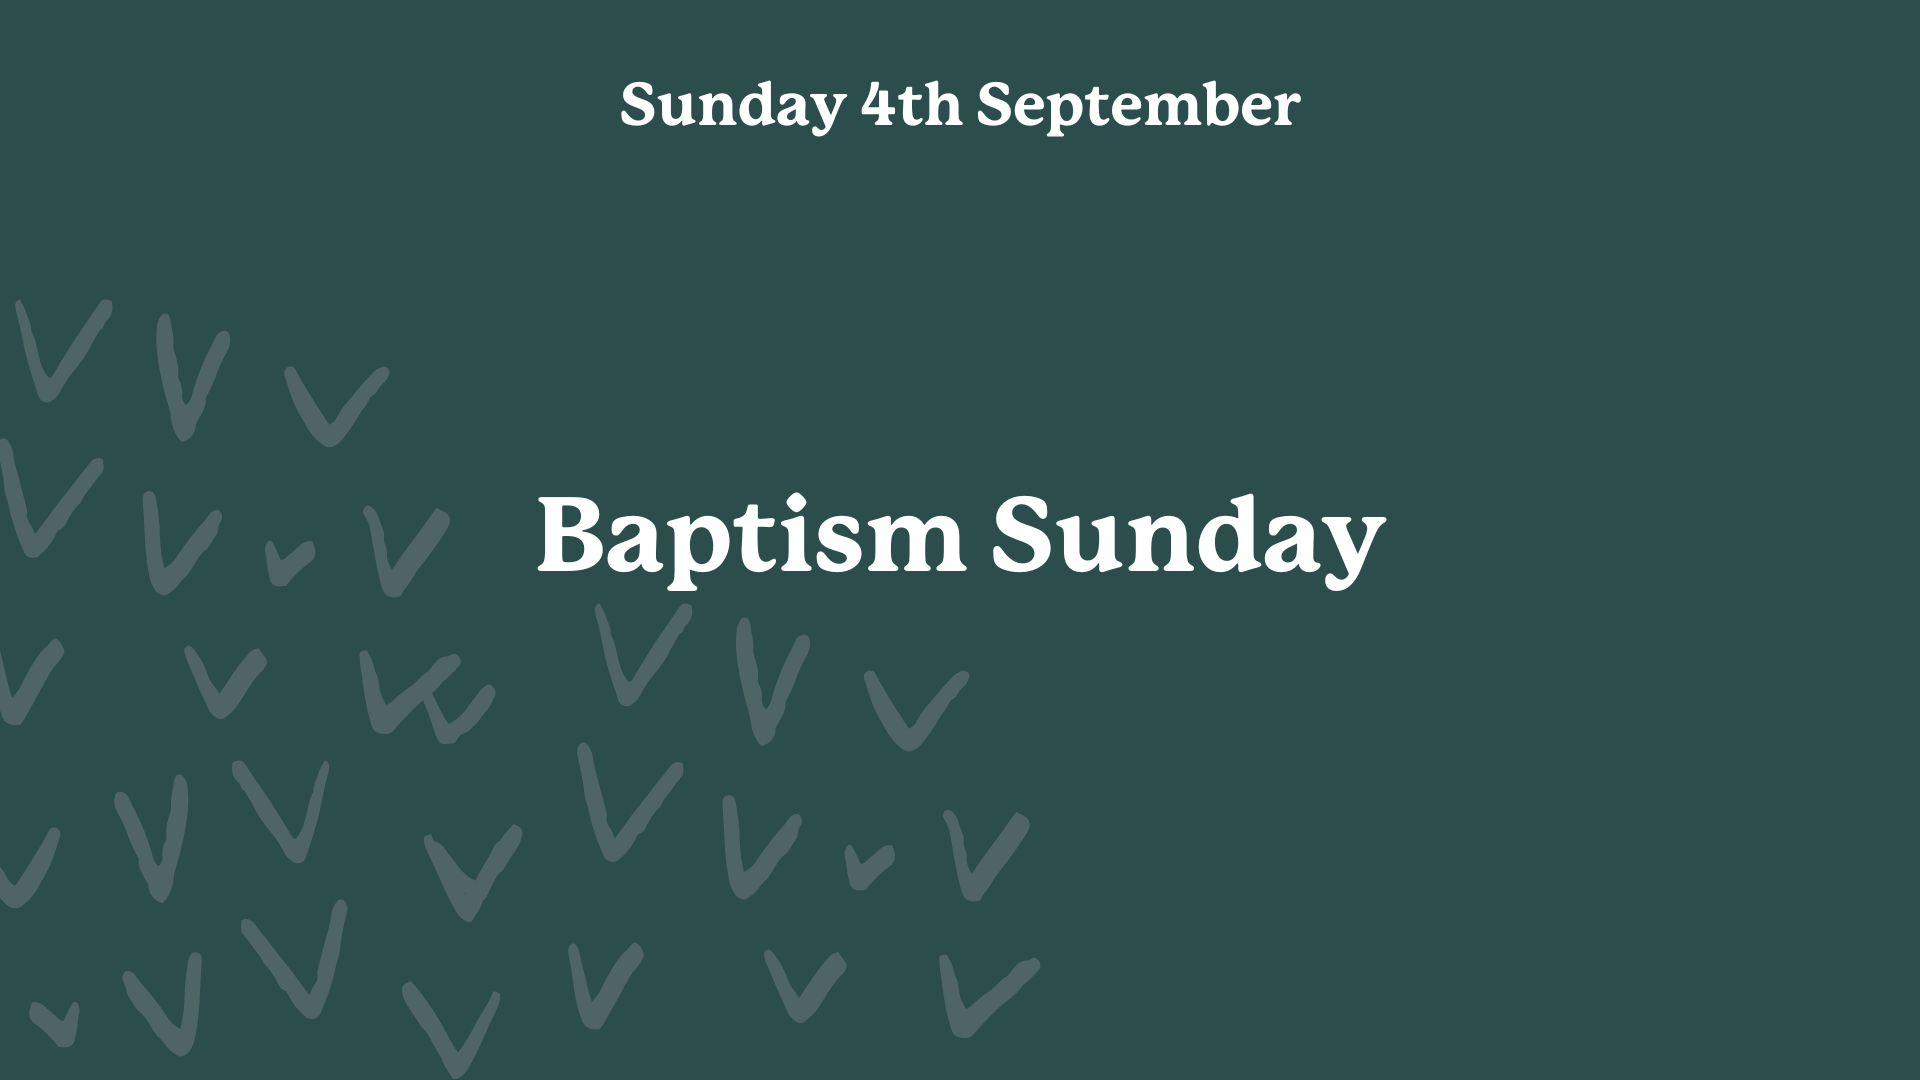 Sunday Service - Baptism & Sowing seeds